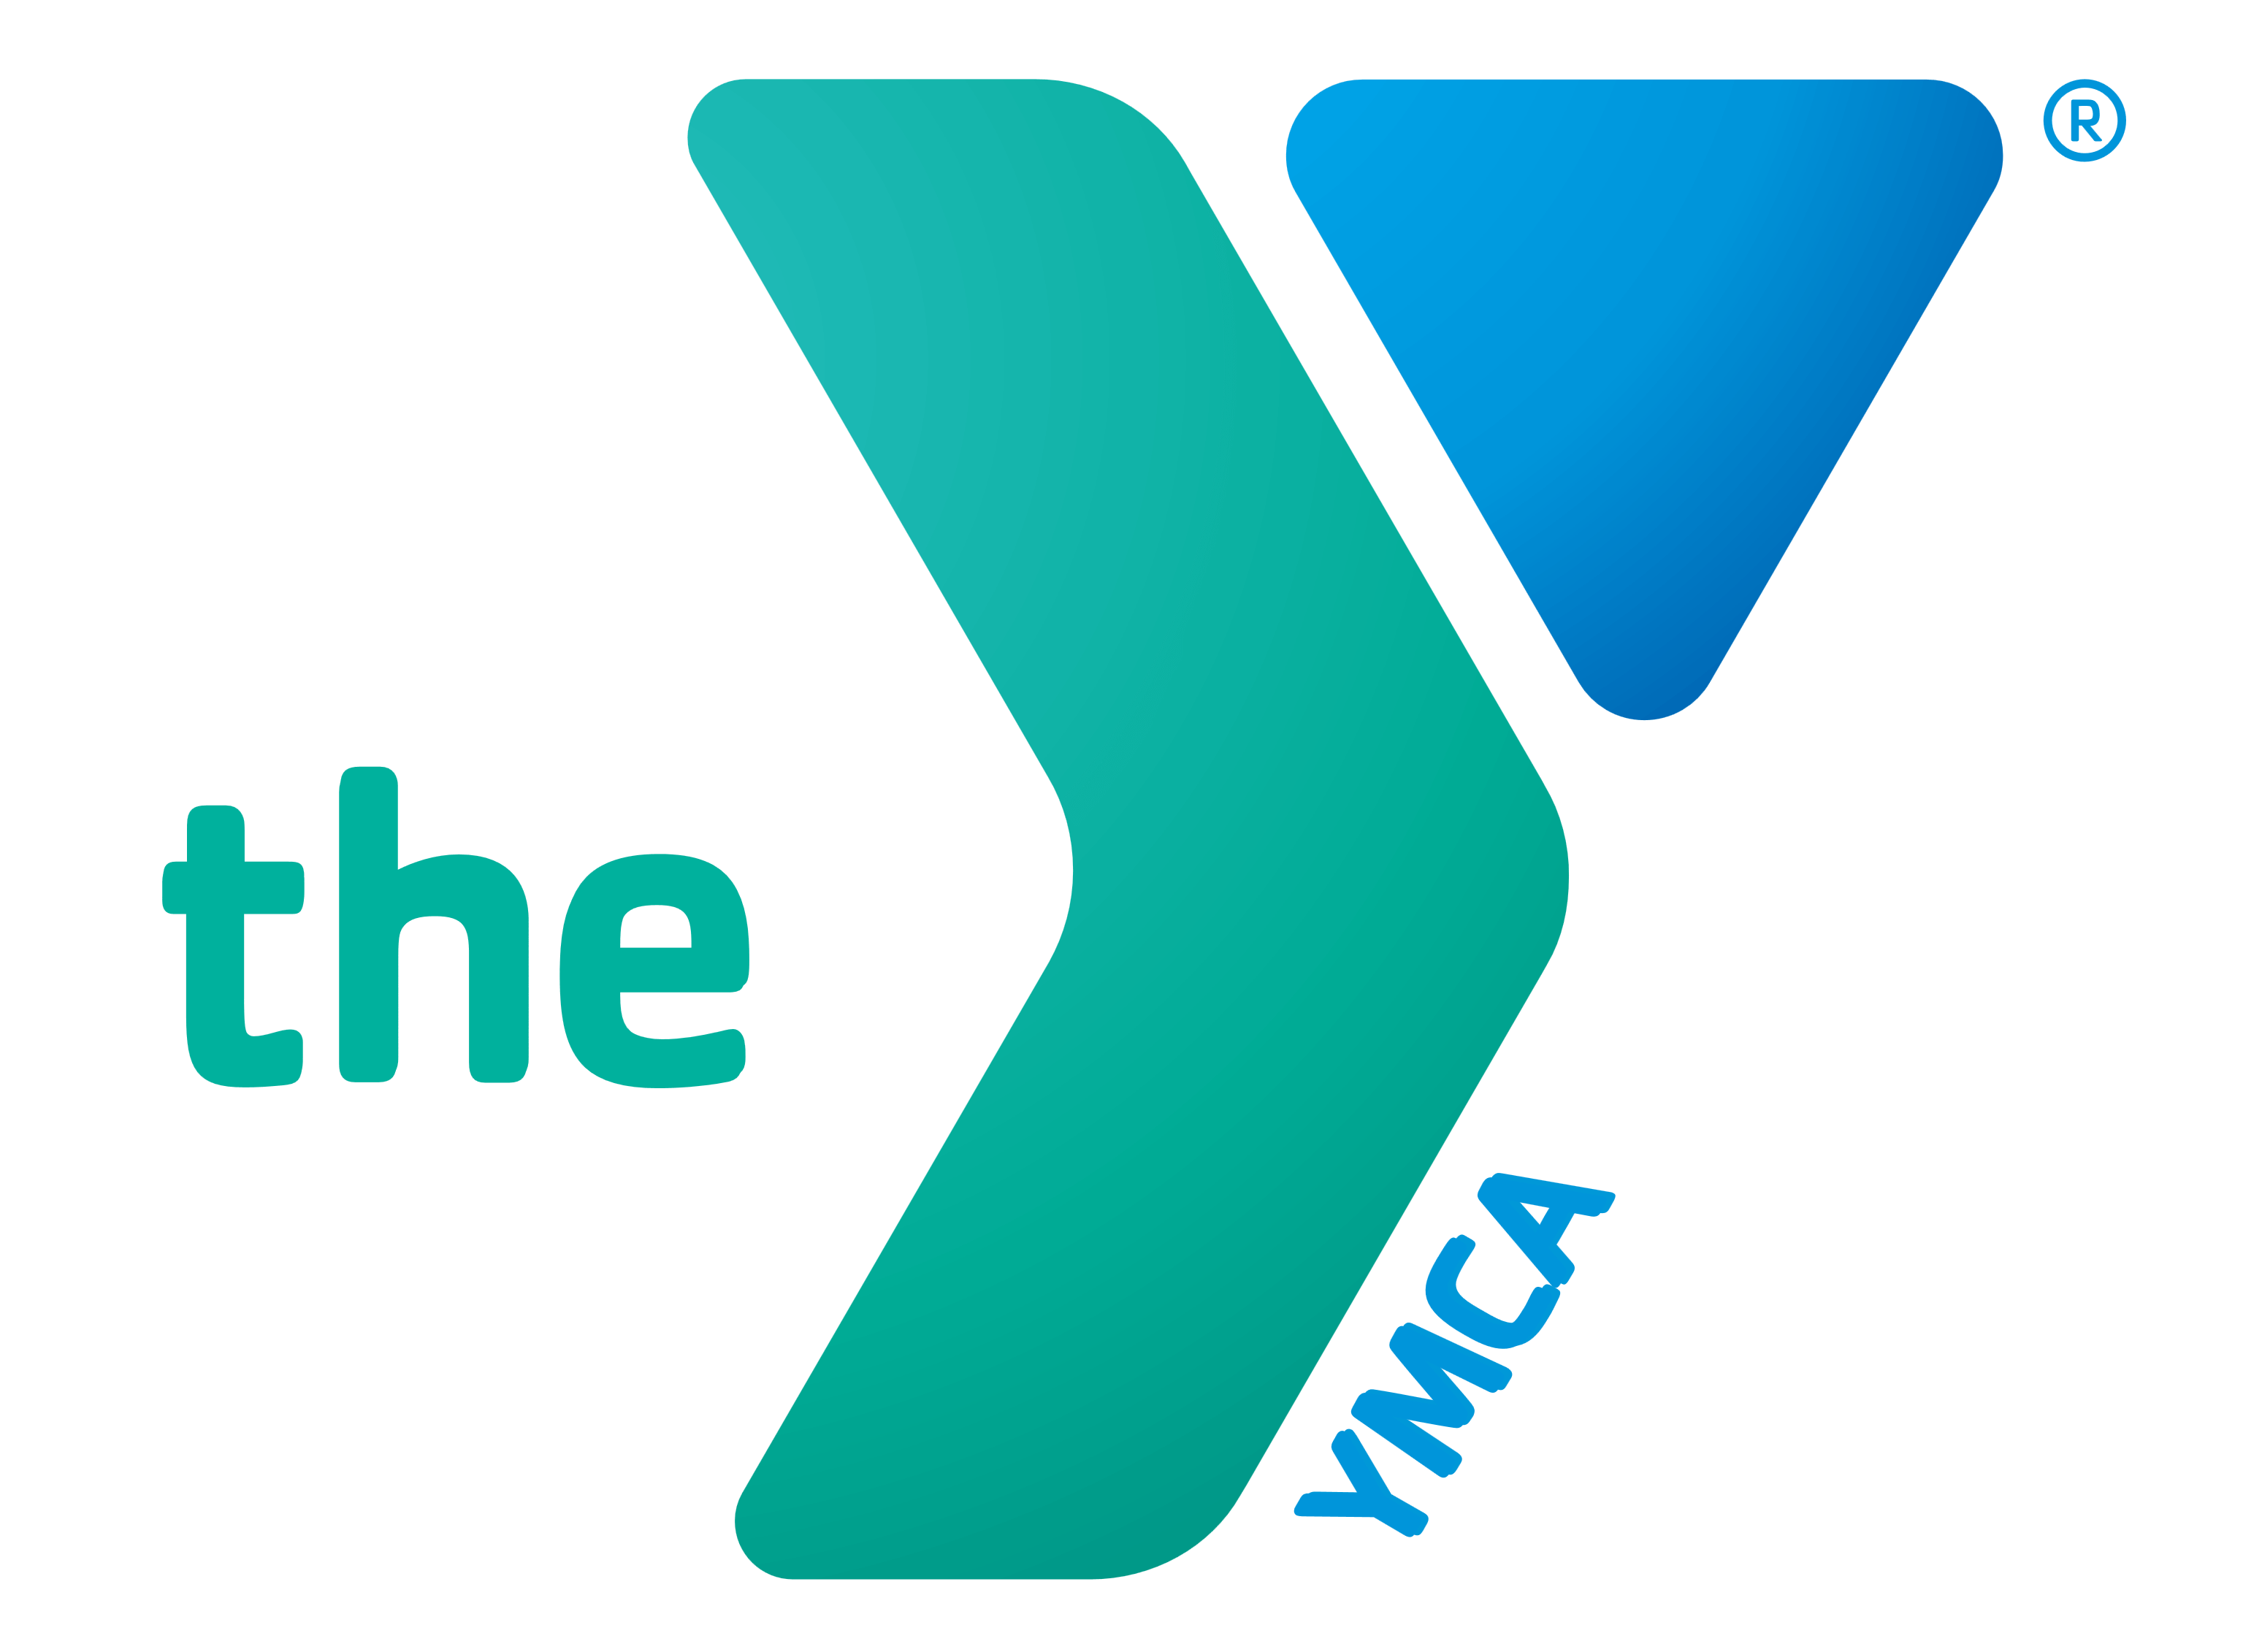 YMCA logo, logotype